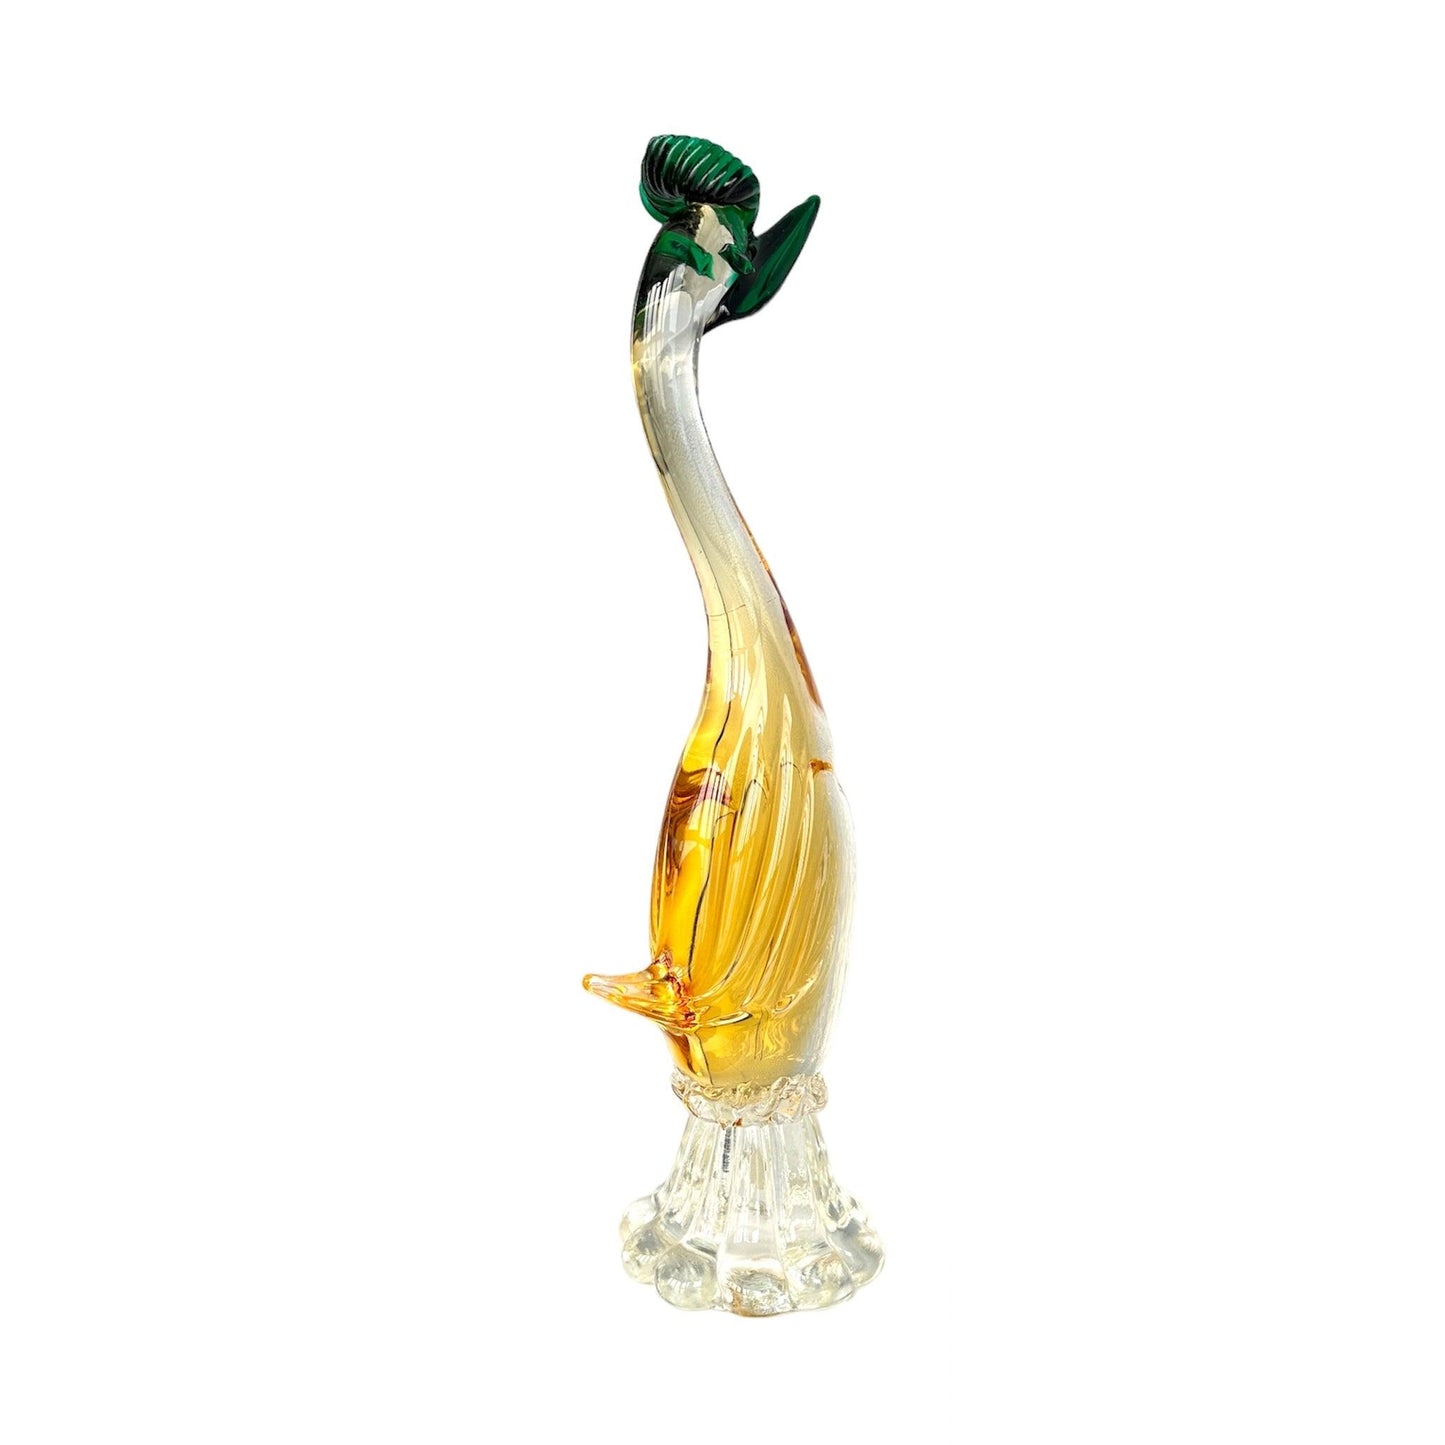 Murano Hand-Blown Italian Art Glass Duck Figurine - Exquisite Vintage Collectible!